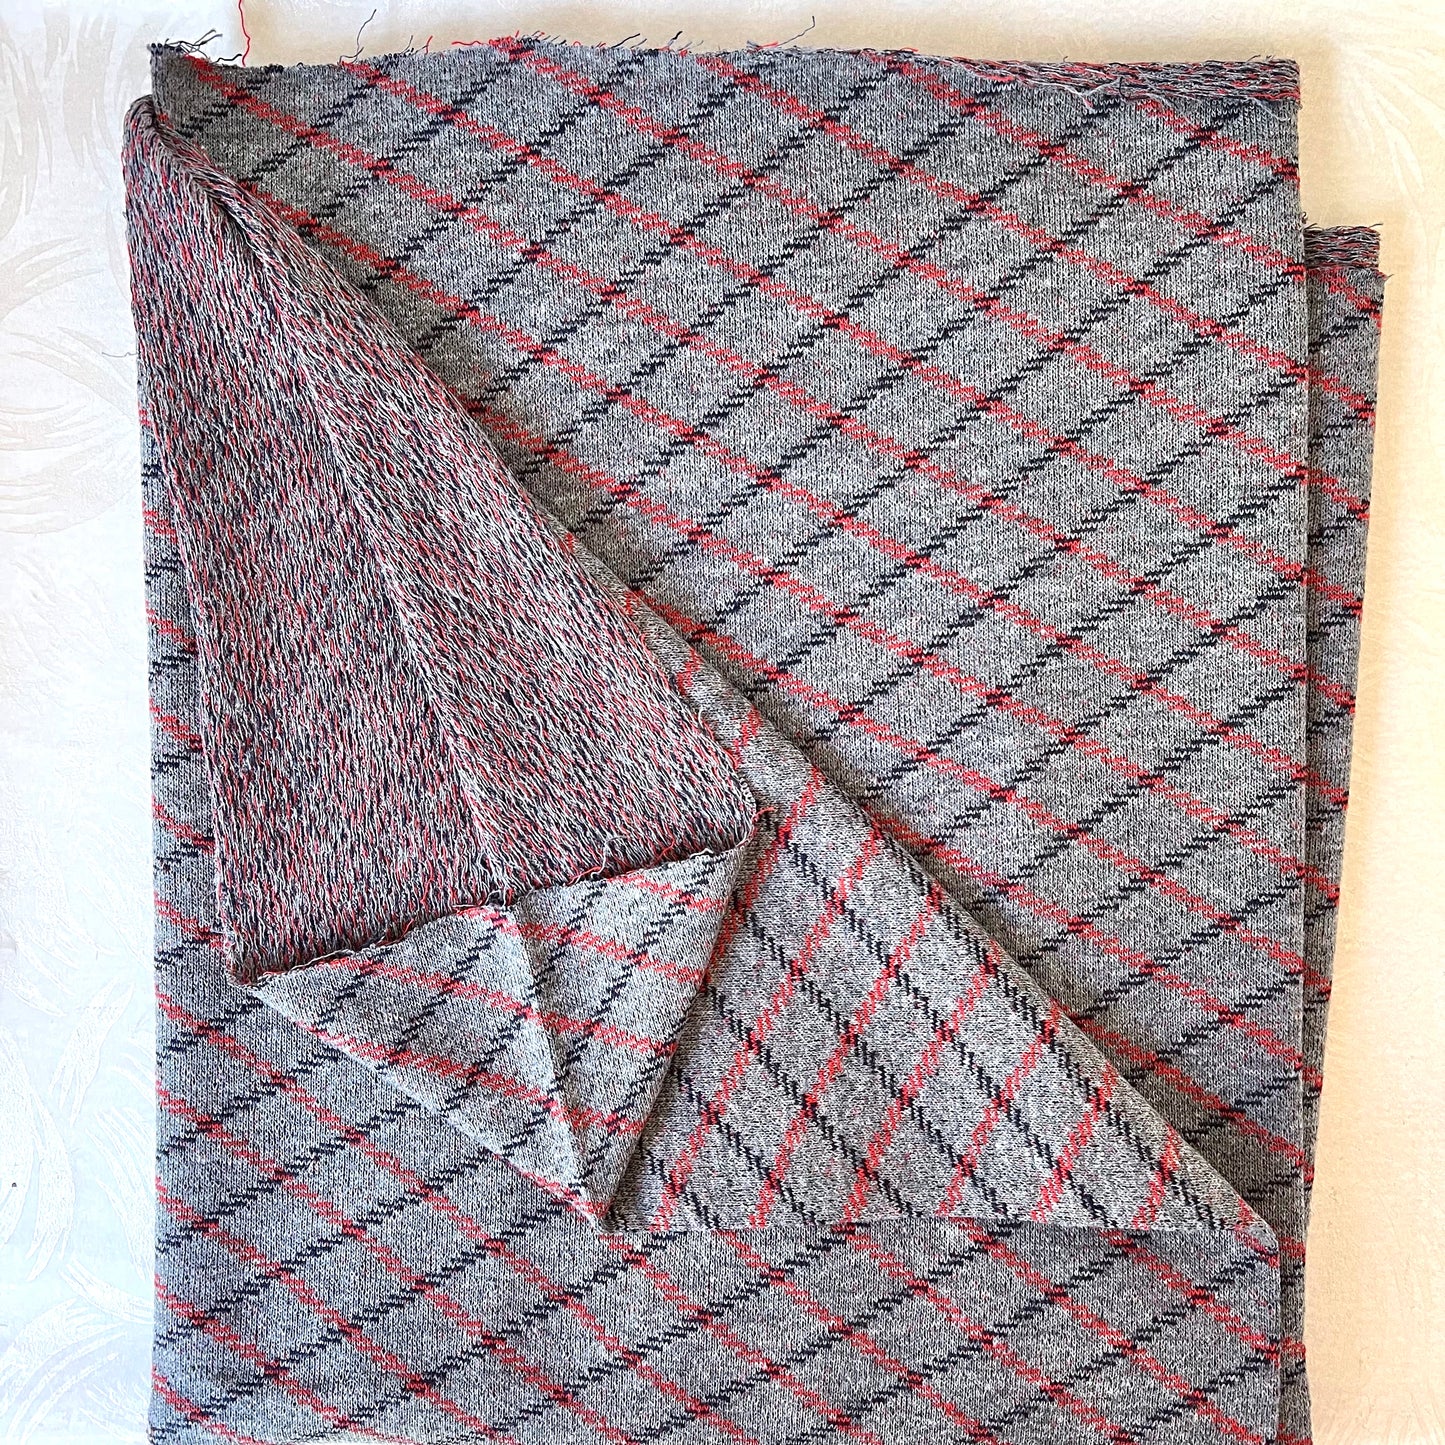 Diamond Plaid Double-Knit Fabric